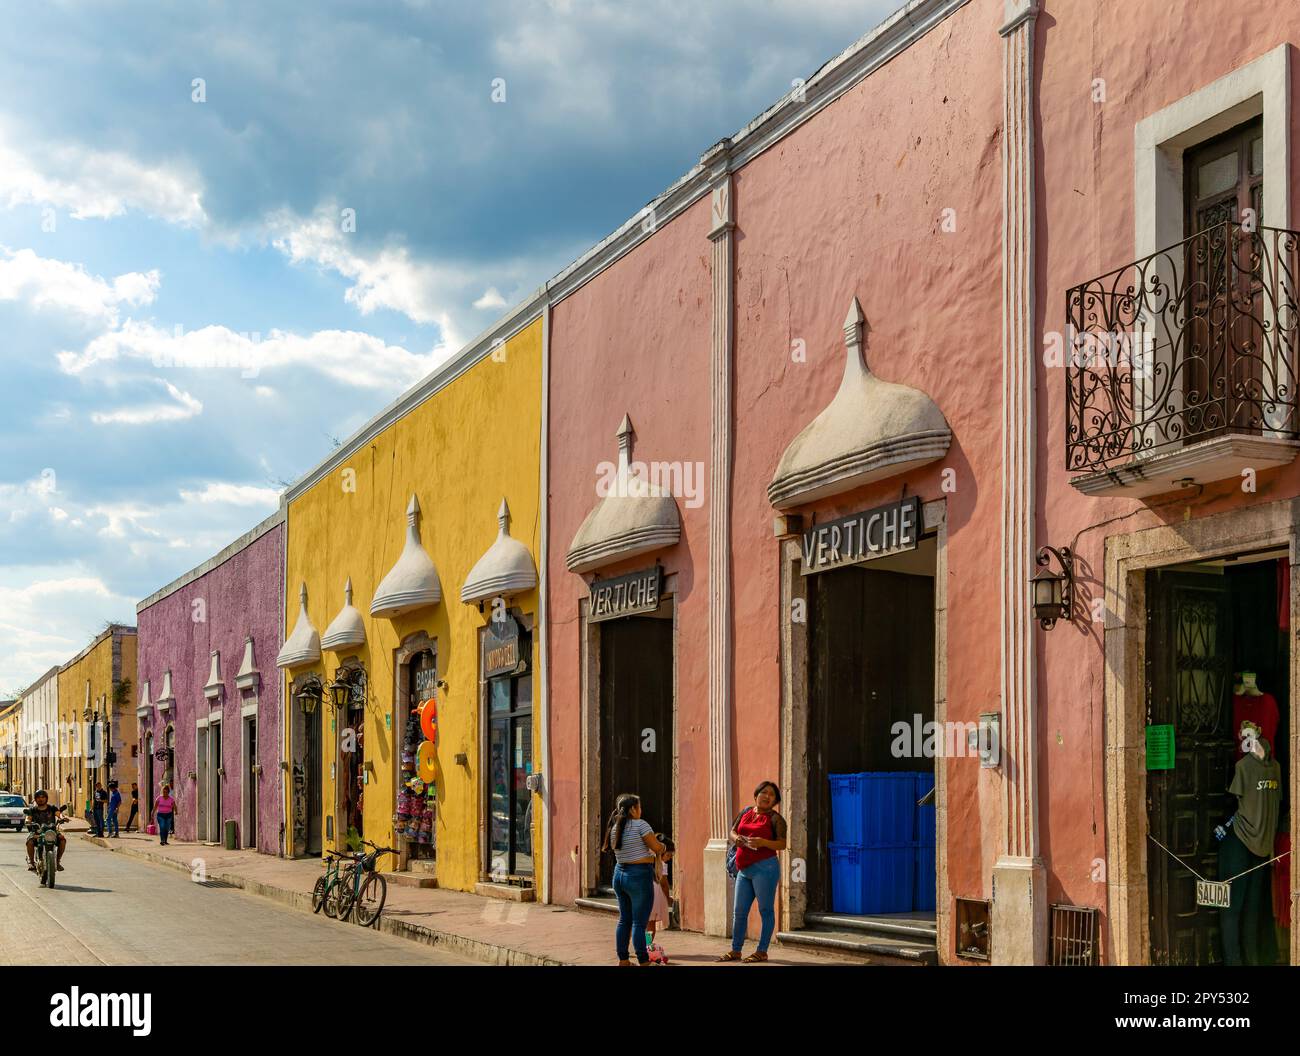 Shops including Vertiche in historic Spanish colonial buildings city centre, Vallodolid, Yucatan, Mexico Stock Photo